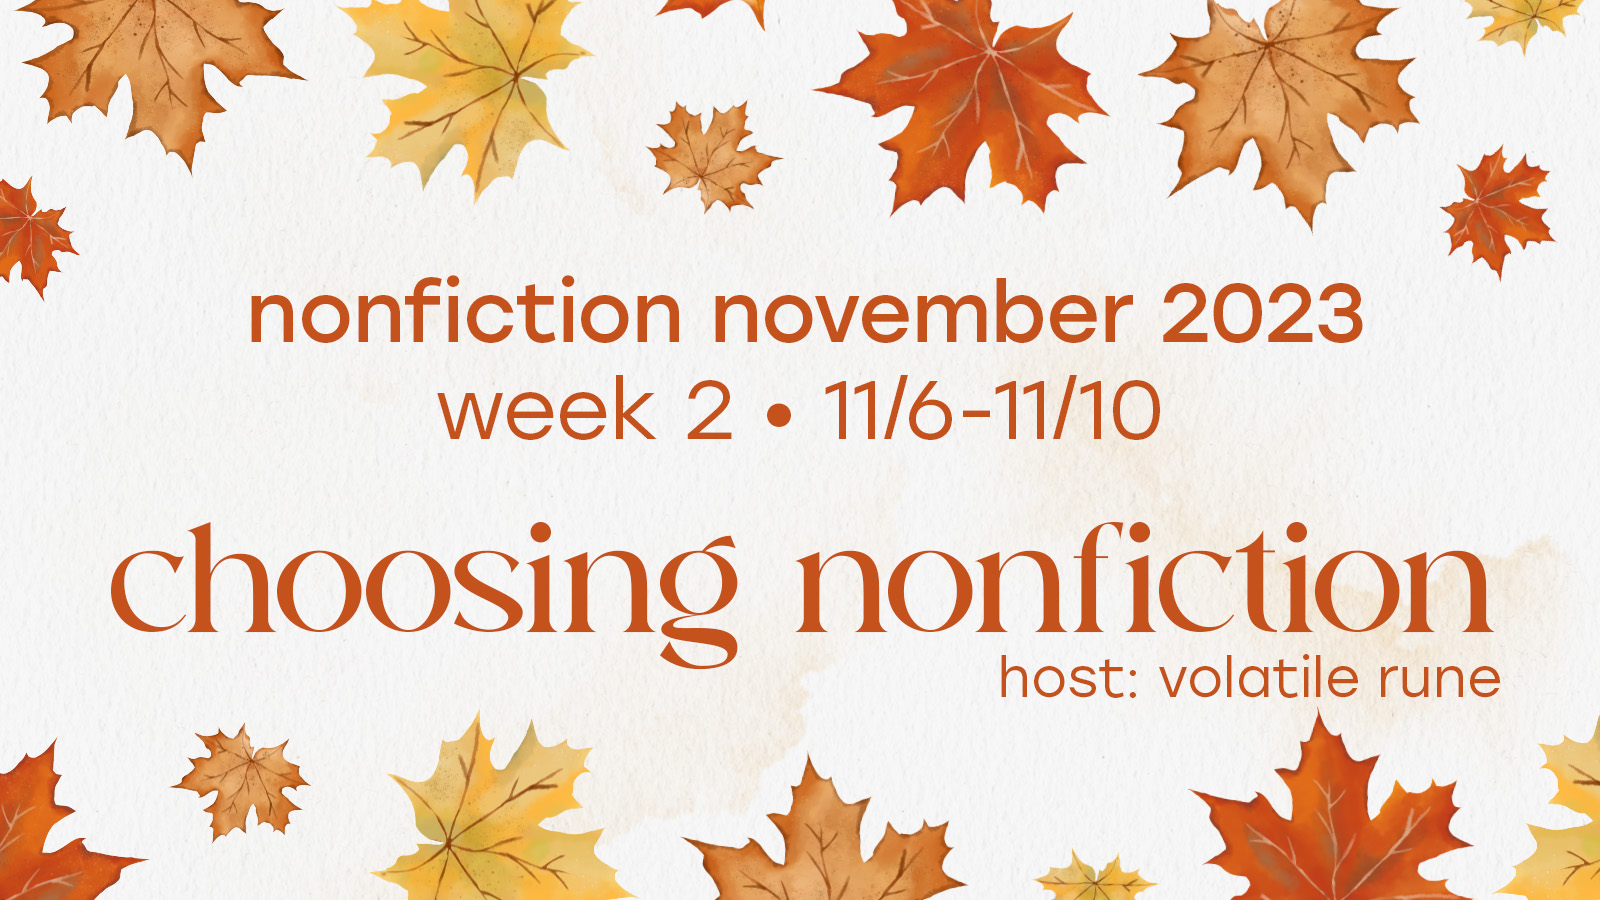 Nonfiction November #NonFicNov23 – Week Two, Choosing Nonfiction